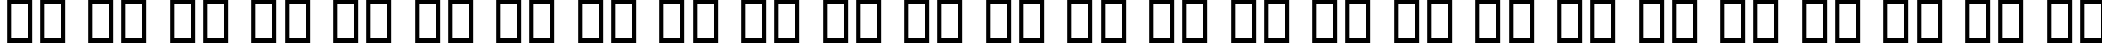 Пример написания английского алфавита шрифтом B Mitra